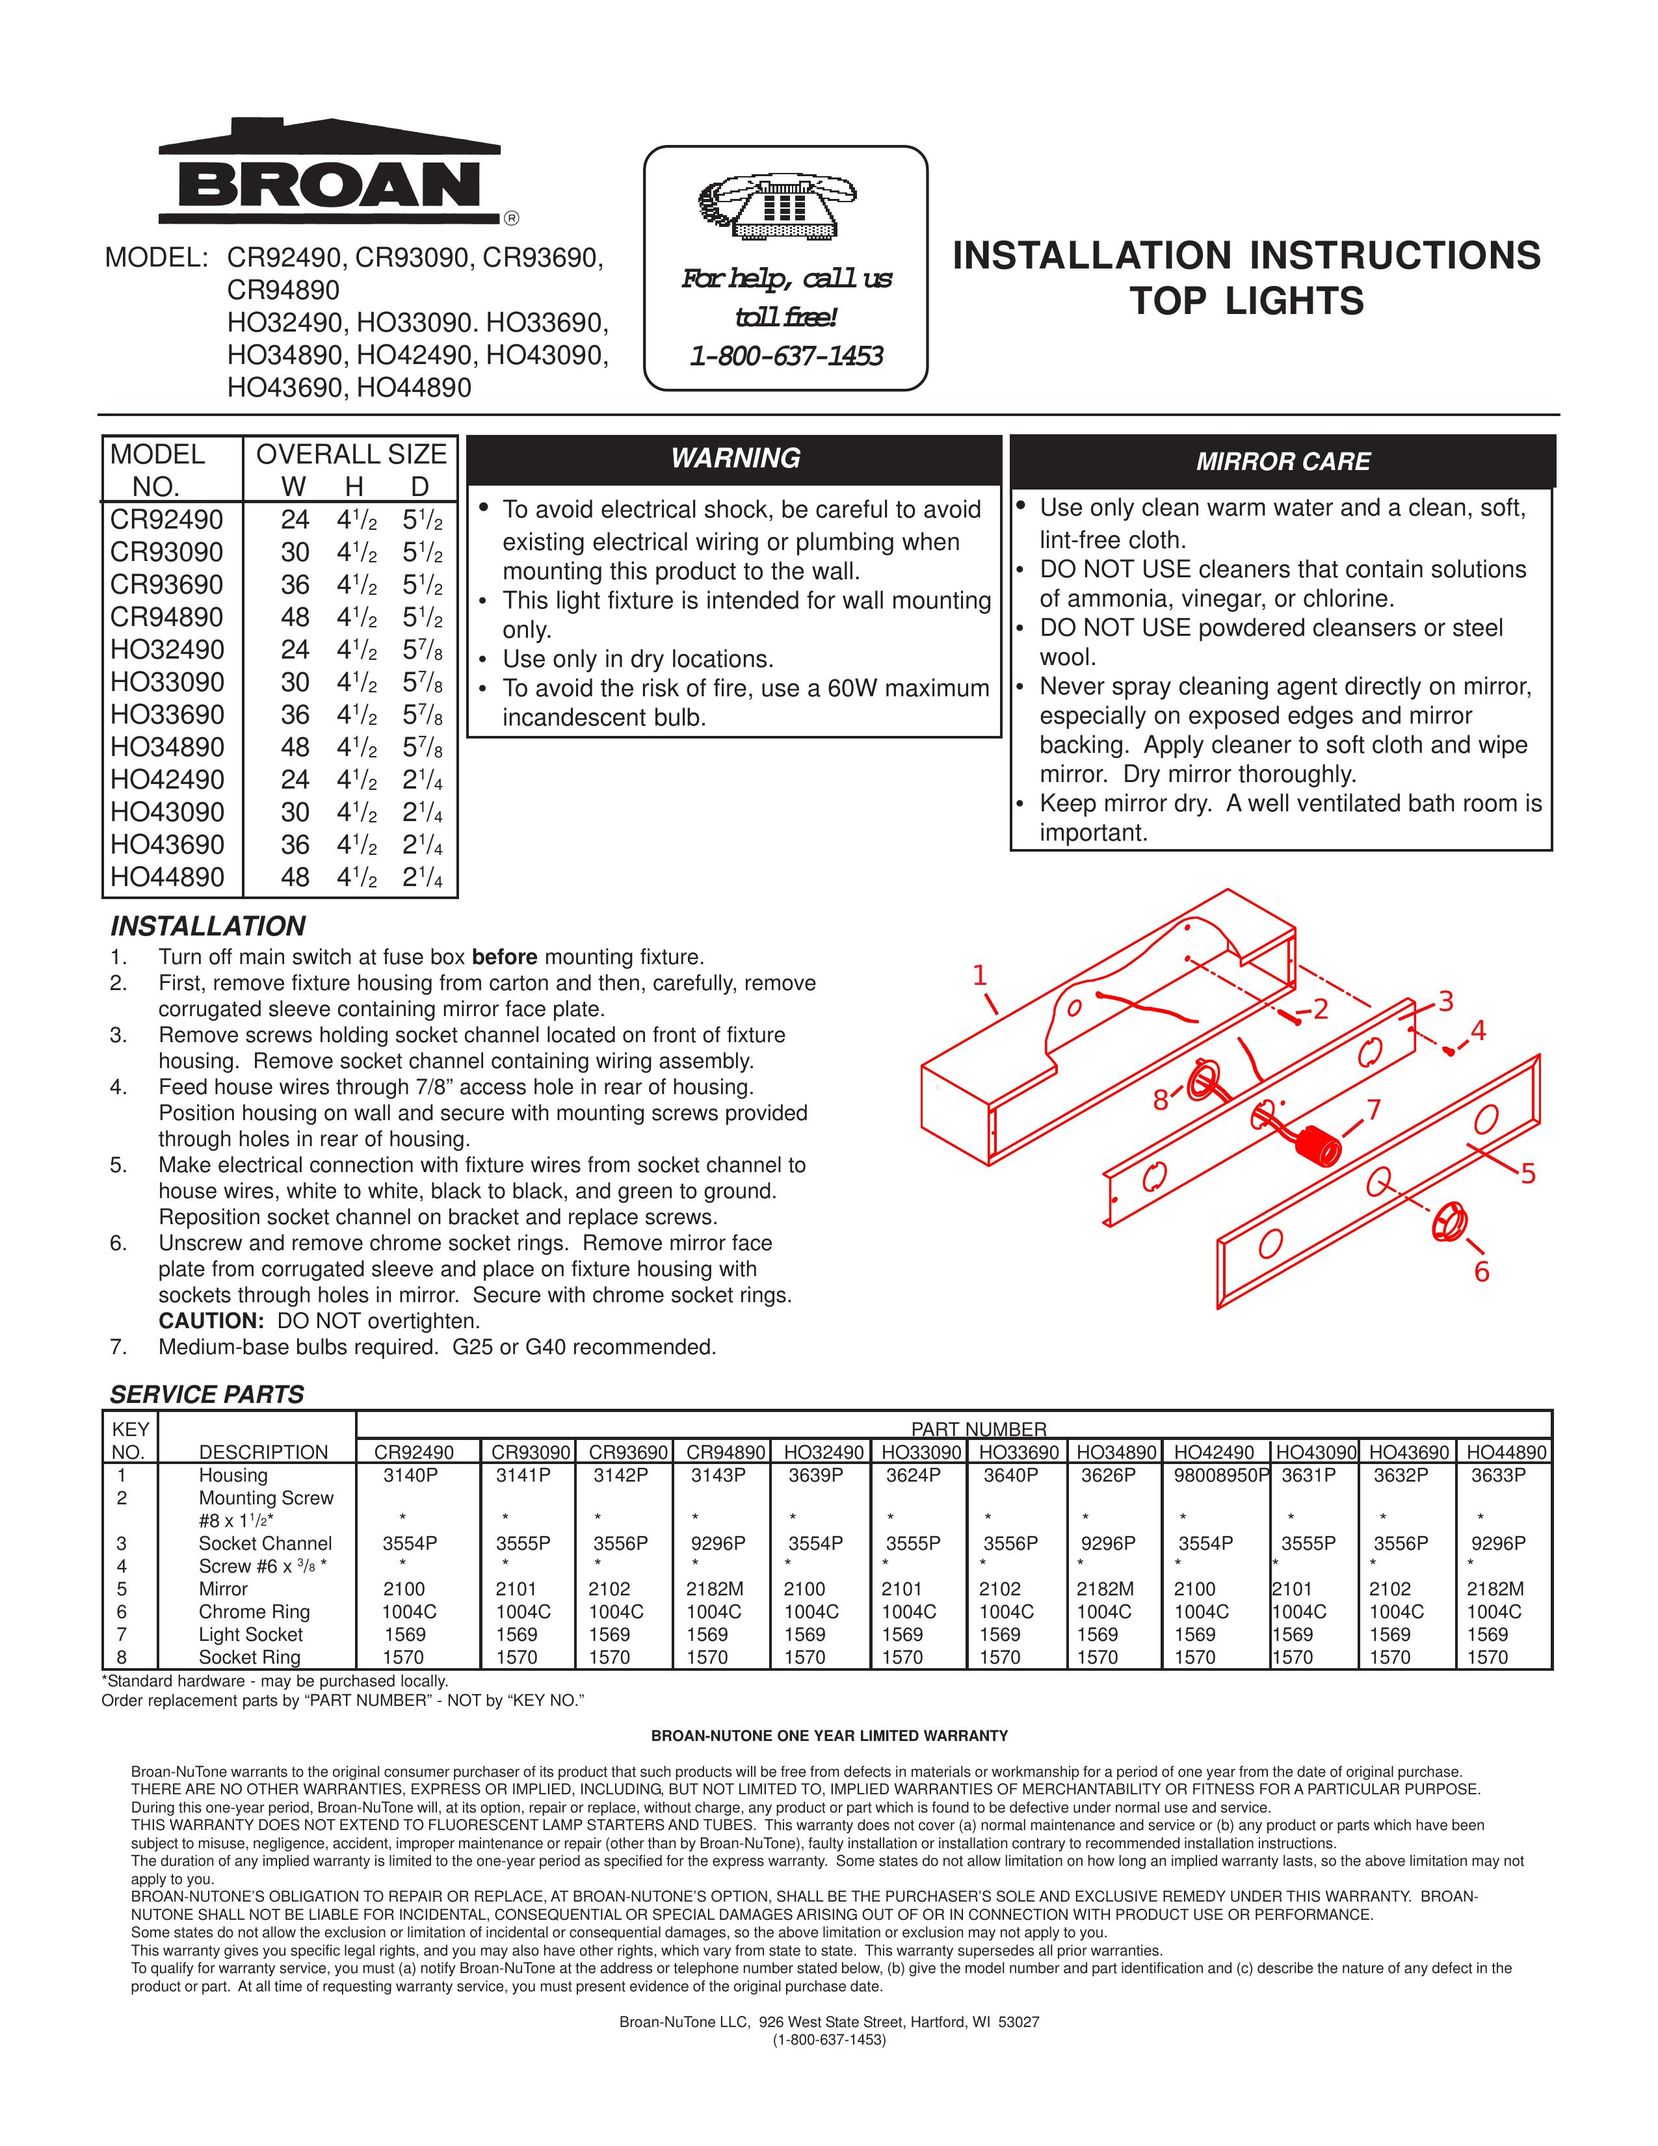 Broan CR93690 Indoor Furnishings User Manual